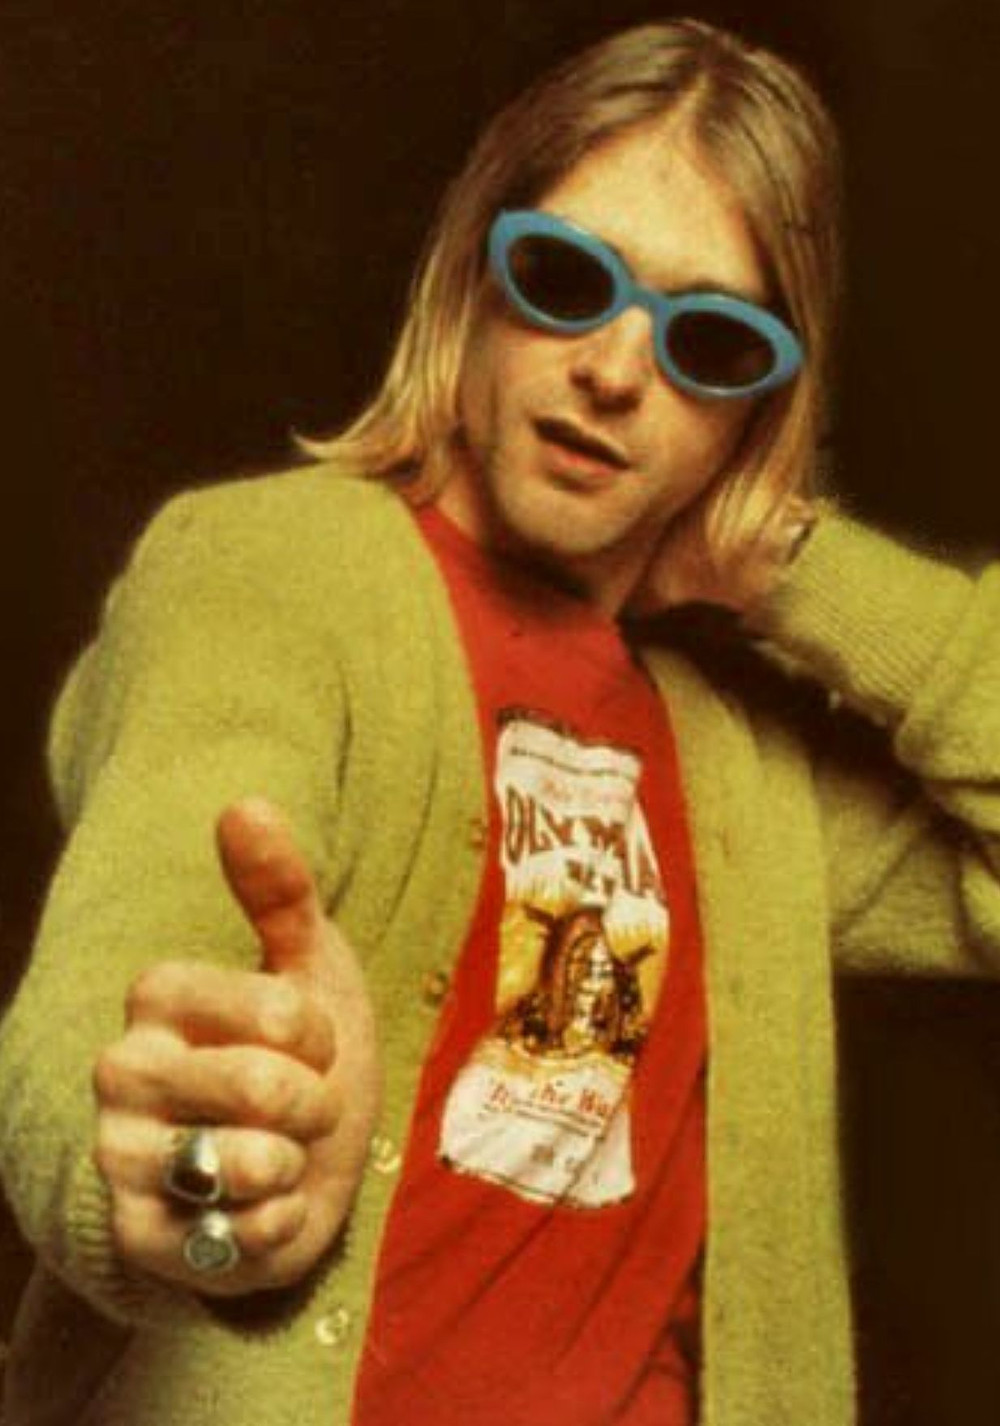 Glimte At passe varemærke X \ Pigeons & Planes على X: "A tribute to Kurt Cobain's sunglasses  https://t.co/9qHlMdn0VL"